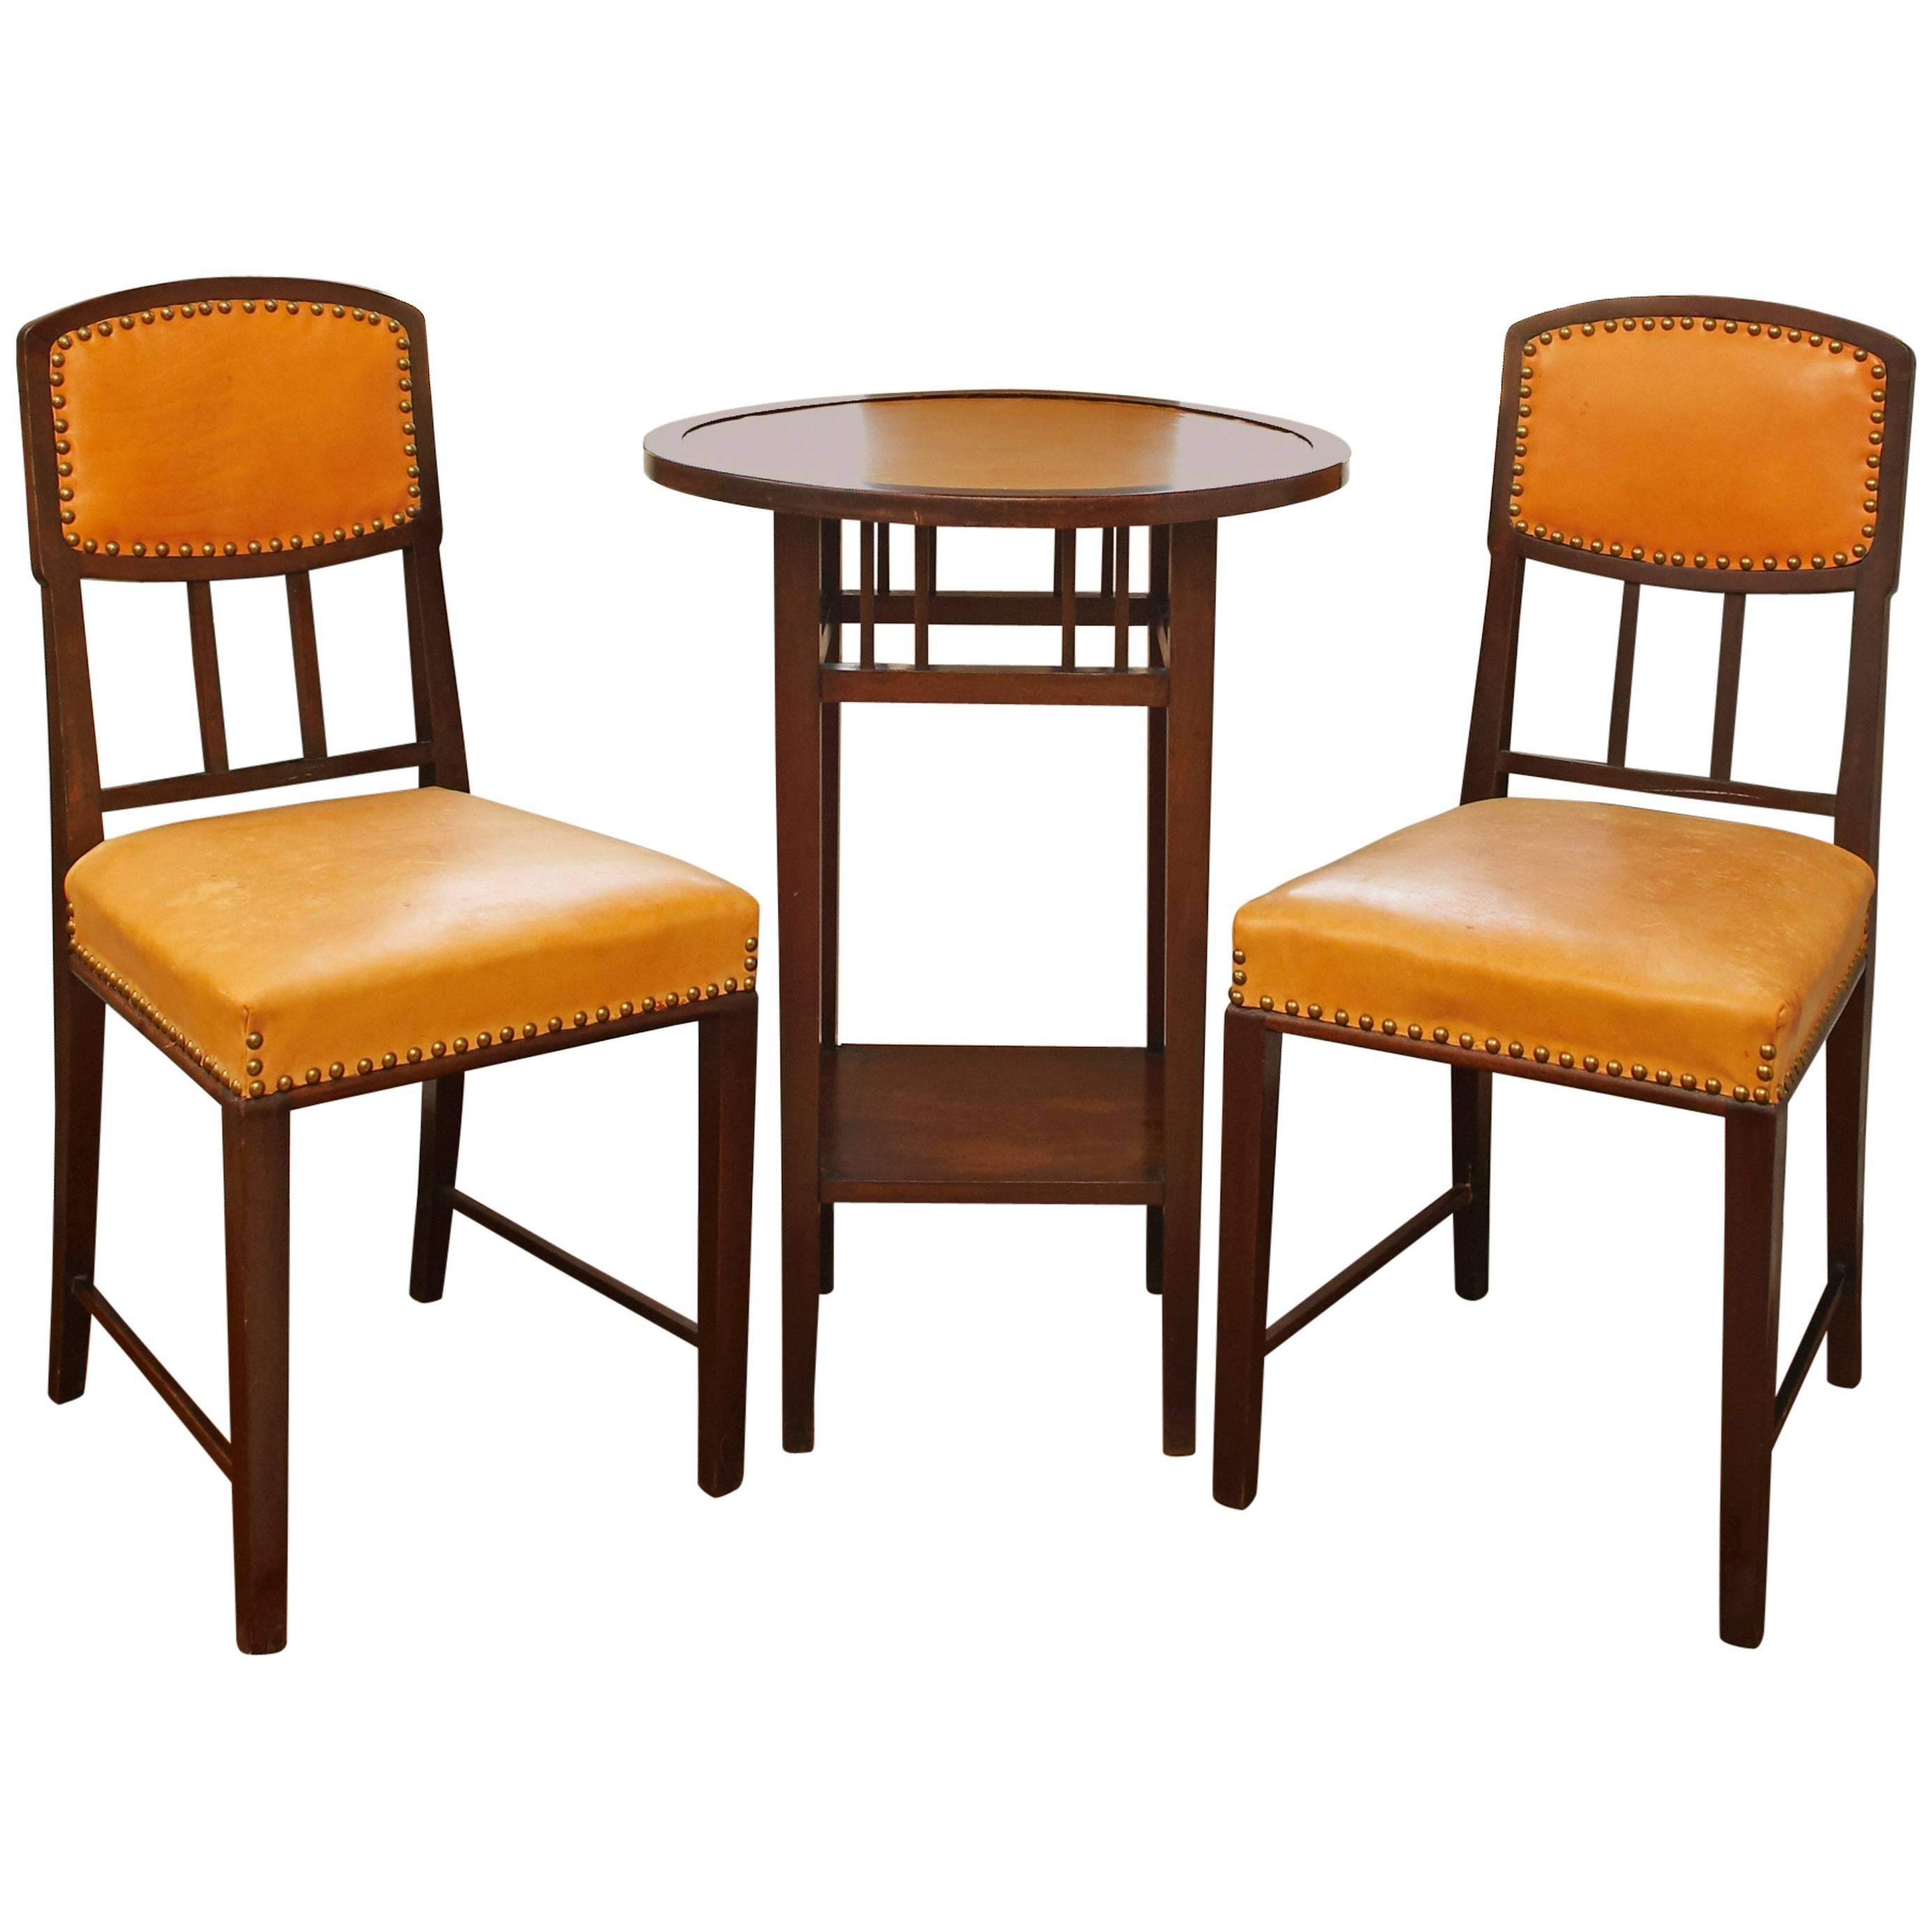 Rare Brazilian Jacaranda Two Chairs and Table Art Nouveau Set, circa 1900 For Sale